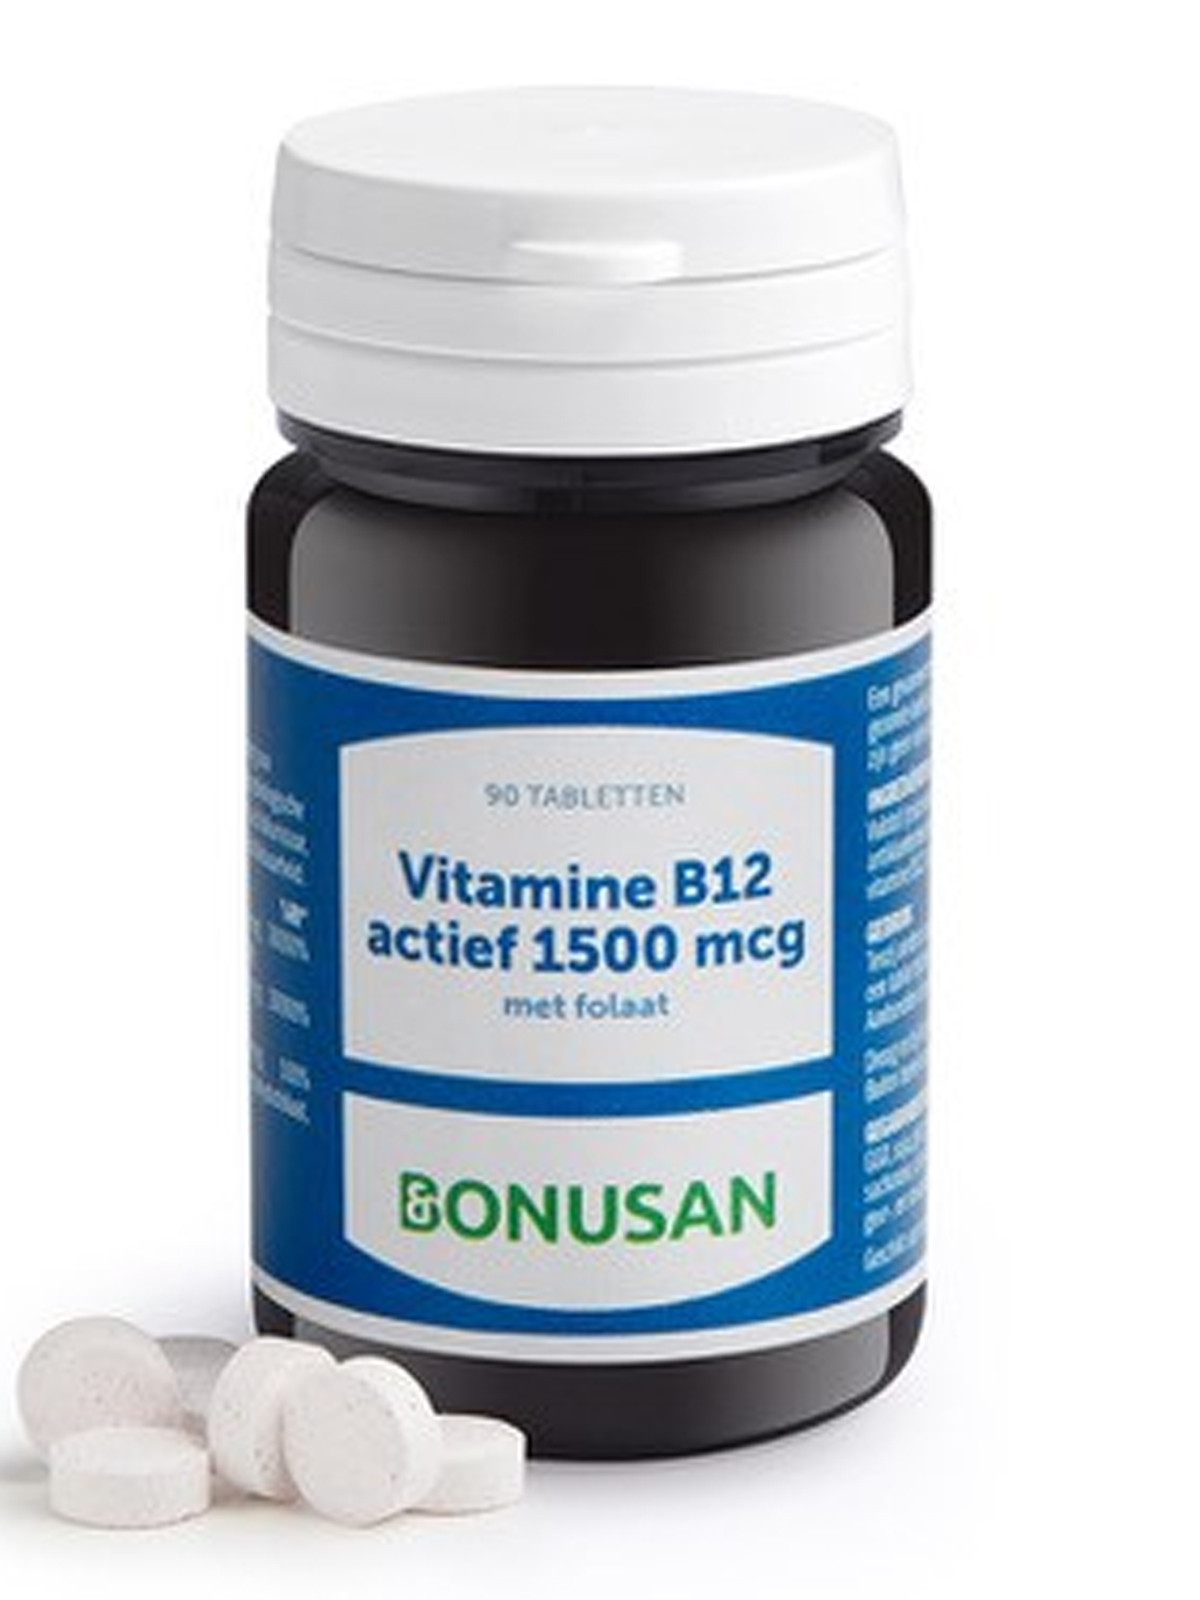 Bonusan - Vitamine B12 actief 1500 mcg 90 tabletten